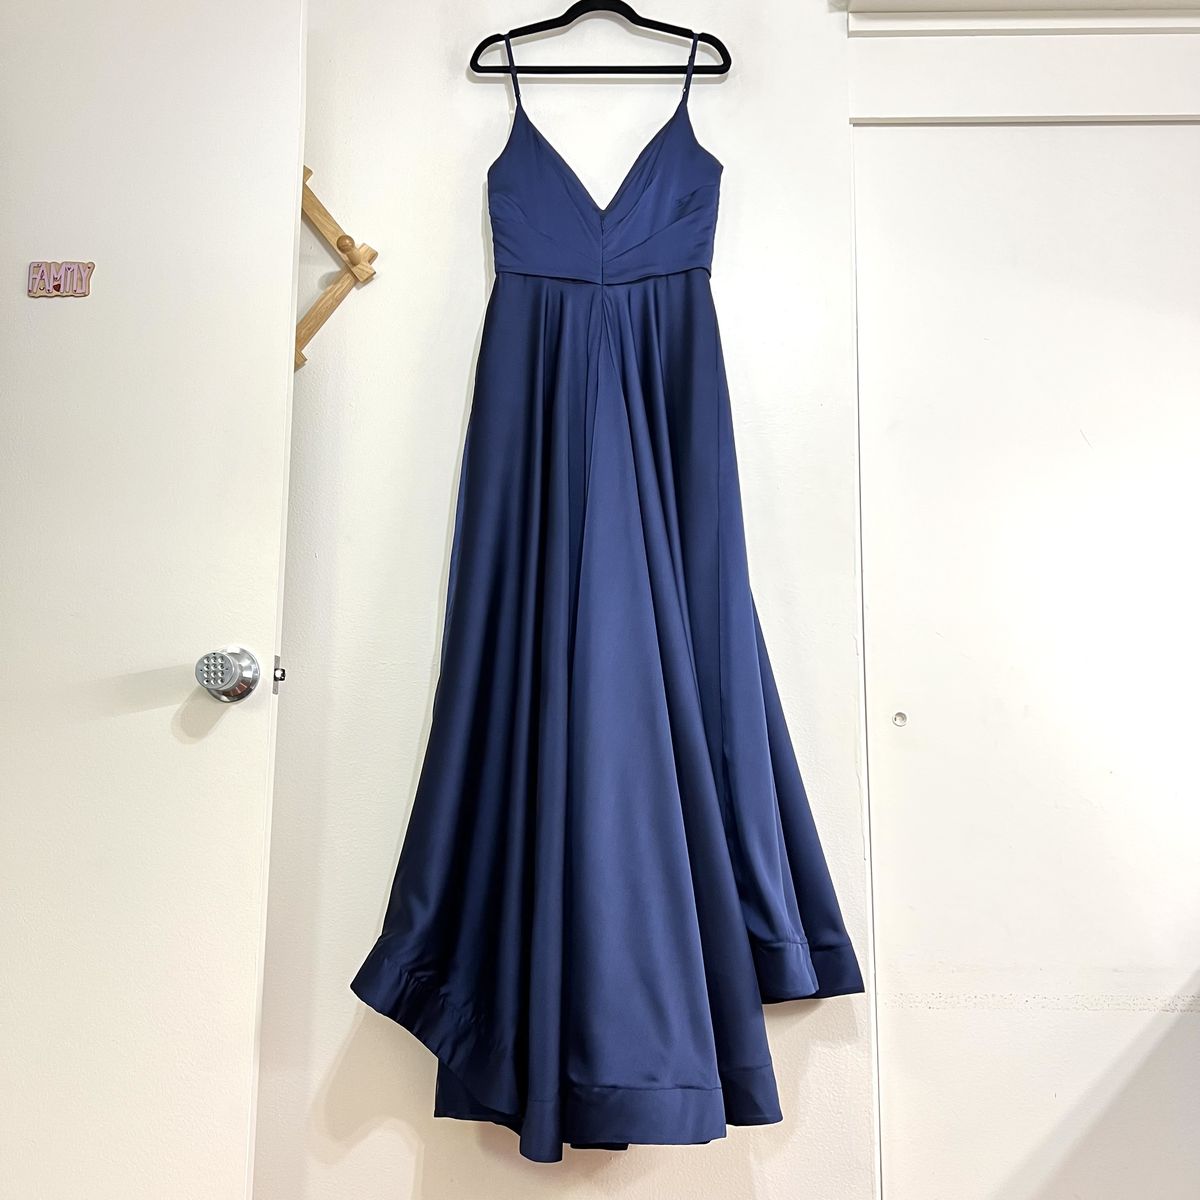 Style 28607 La Femme Size 12 Prom Plunge Navy Blue Side Slit Dress on Queenly